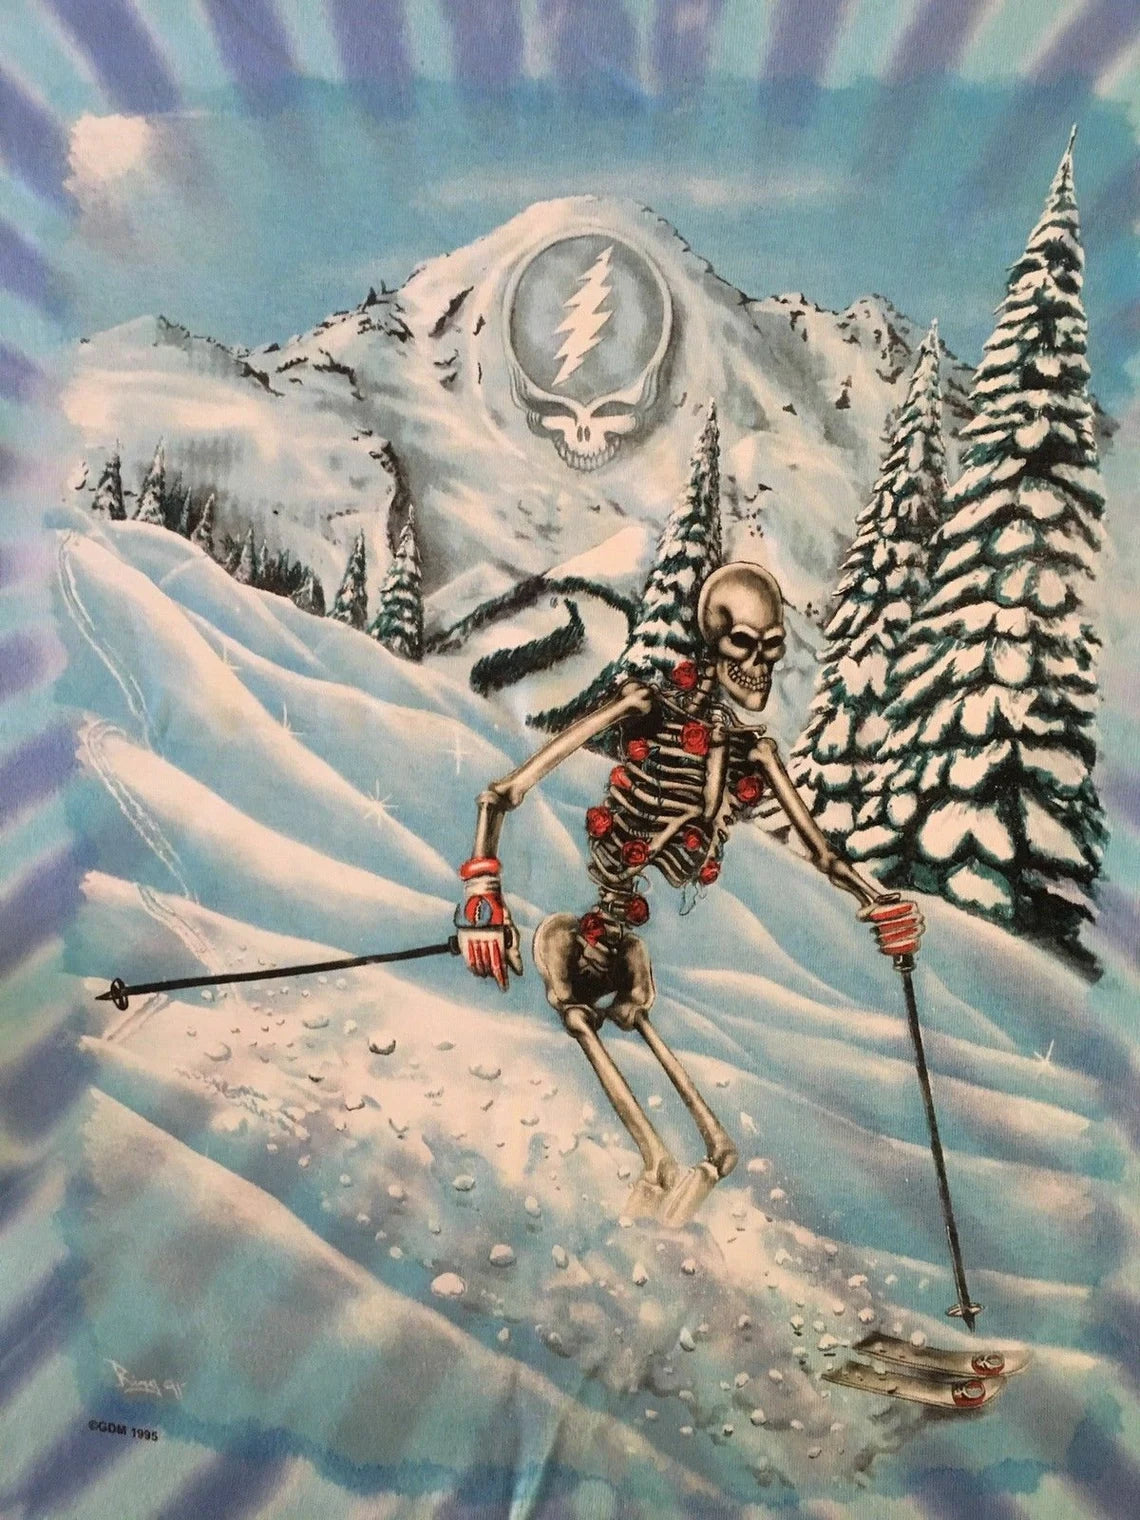 Grateful Dead Powderman skiing shirt - Grateful Dead skiing tie dye shirt - Bertha skiing shirt - Skelton skier shirt - Dead Head shirt - sizes: small, medium, large, XL, 2XL, 3XL, 4XL and 5XL